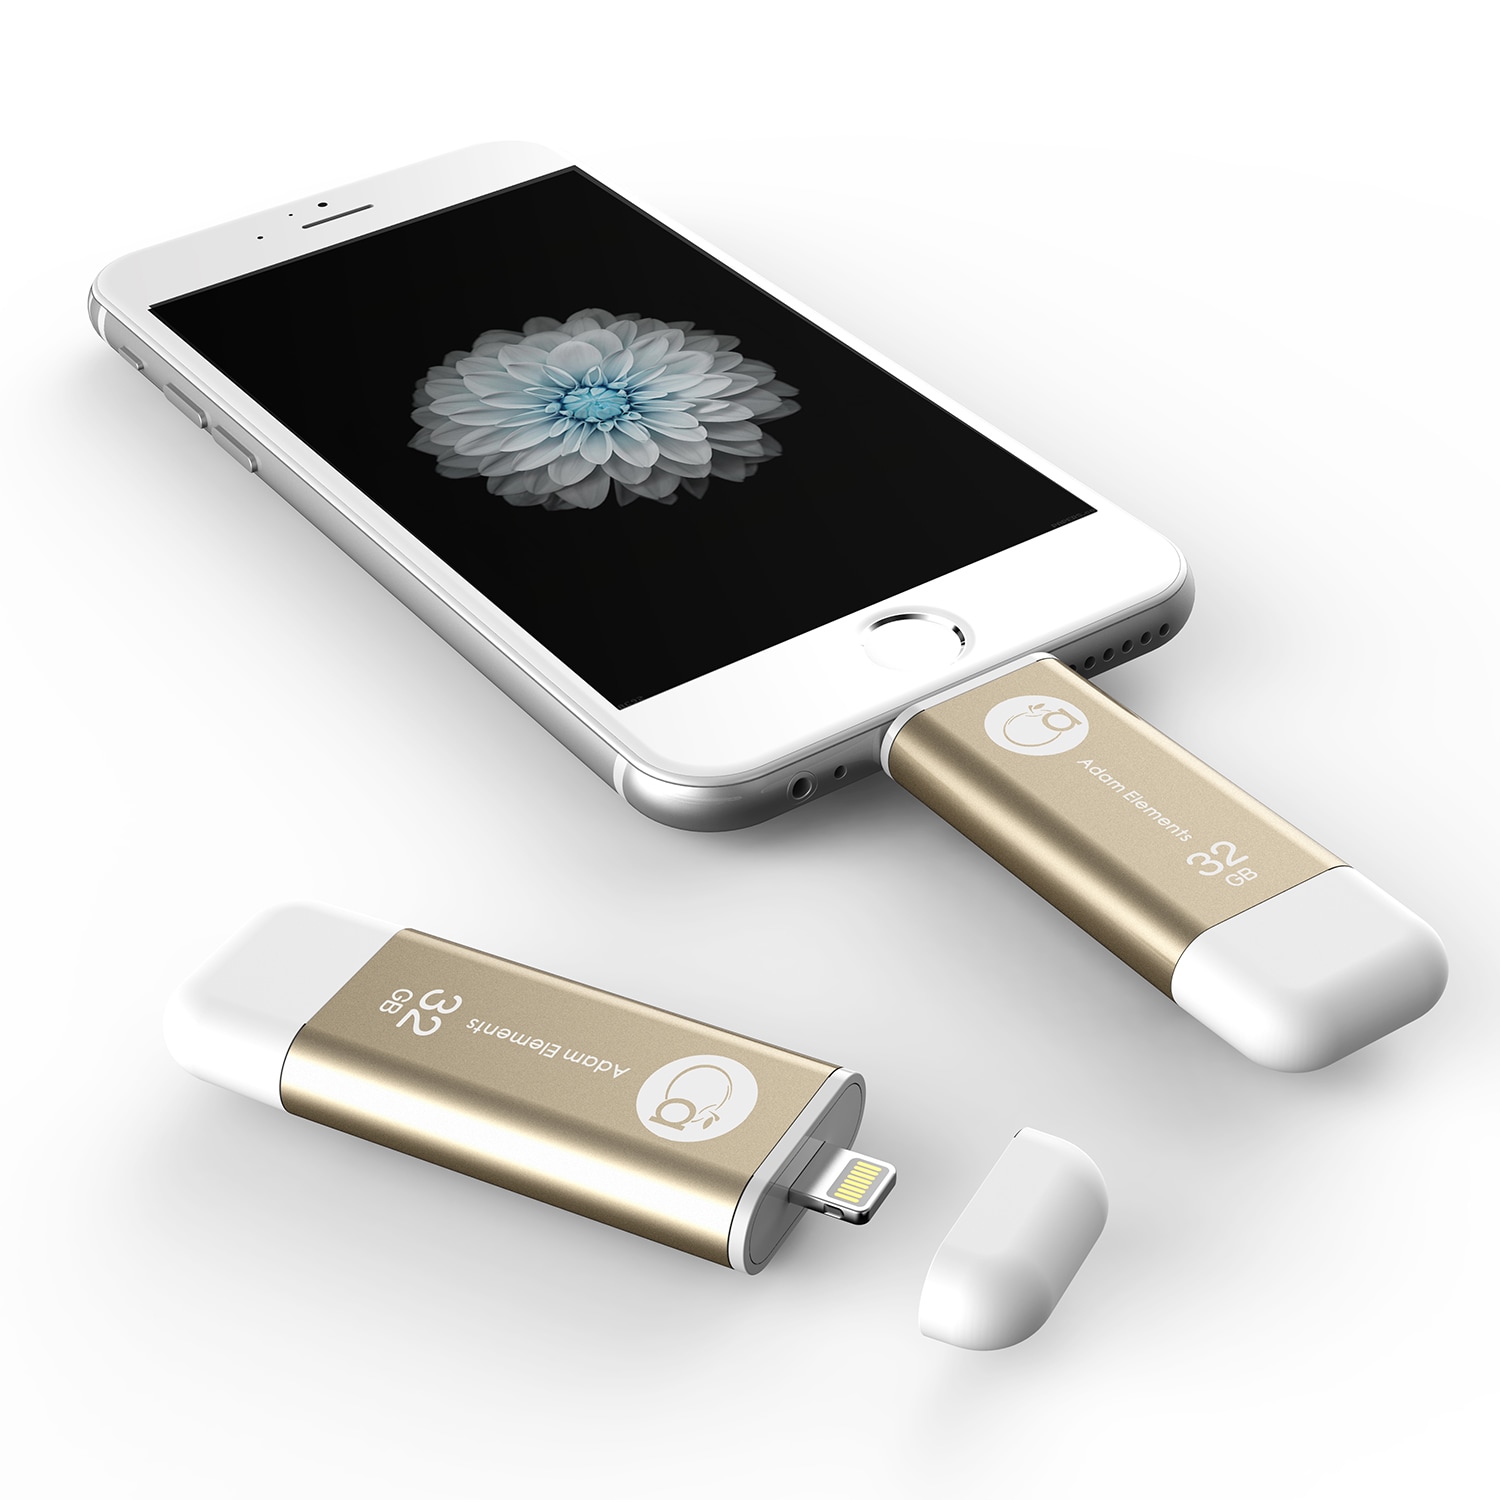 iKlips world's fastest flash drive for iPhone&iPad | Indiegogo